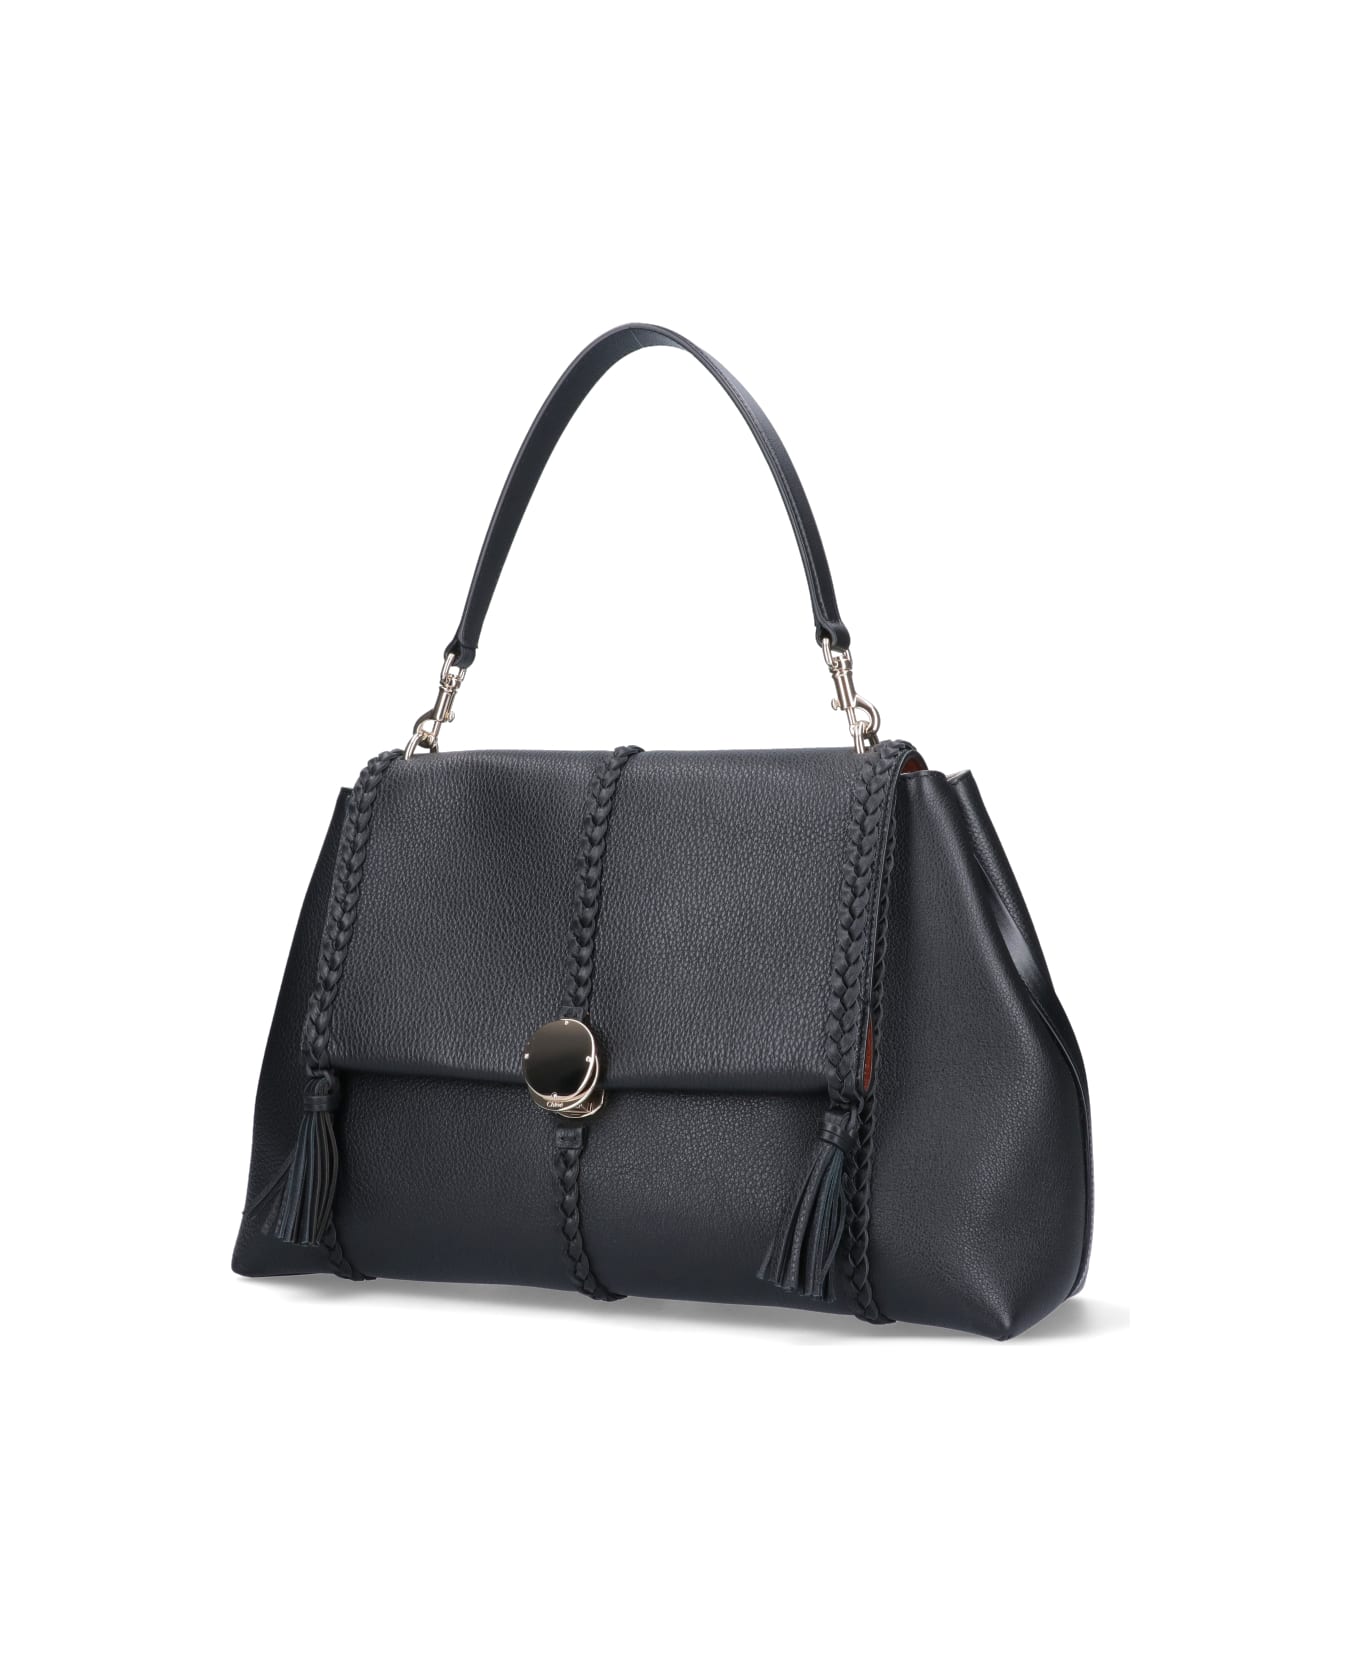 Chloé Penelope Large Leather Bag - Black